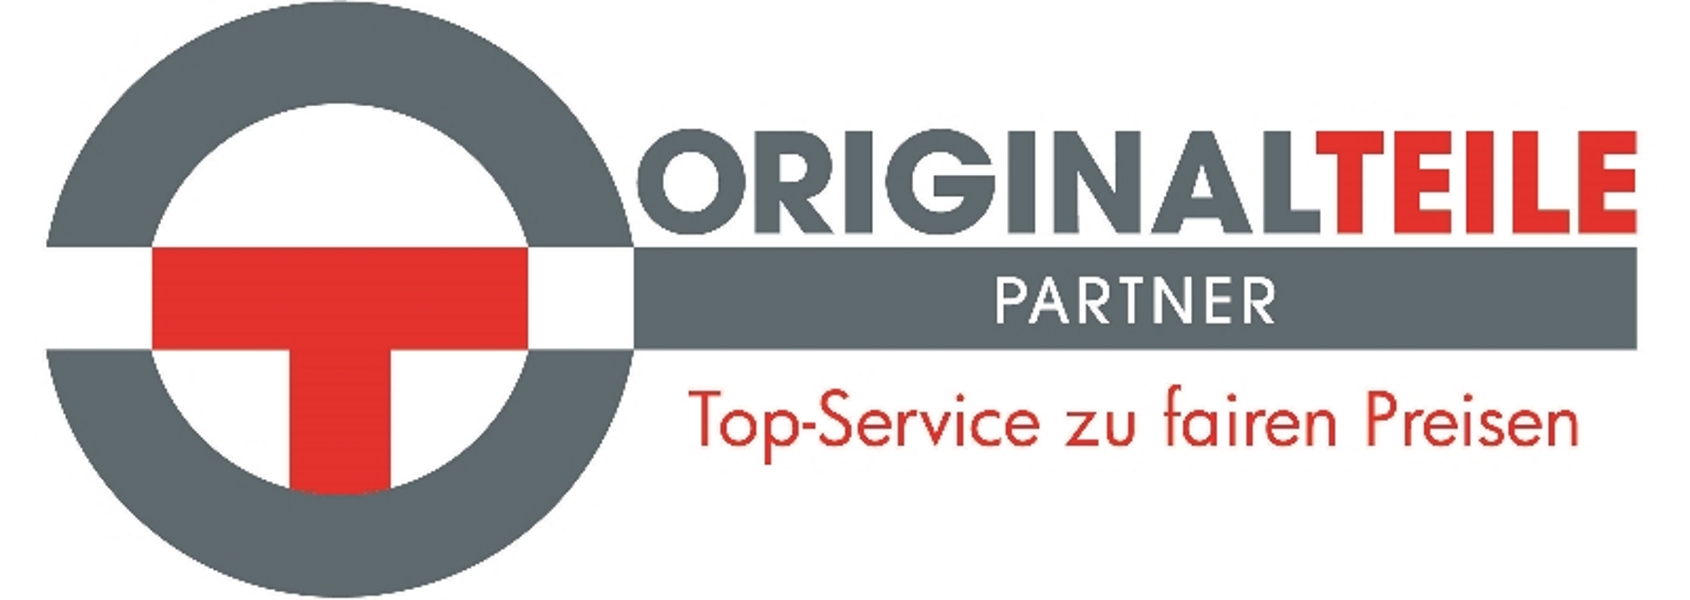 Birner Originalteile Partner Logo 1690x600